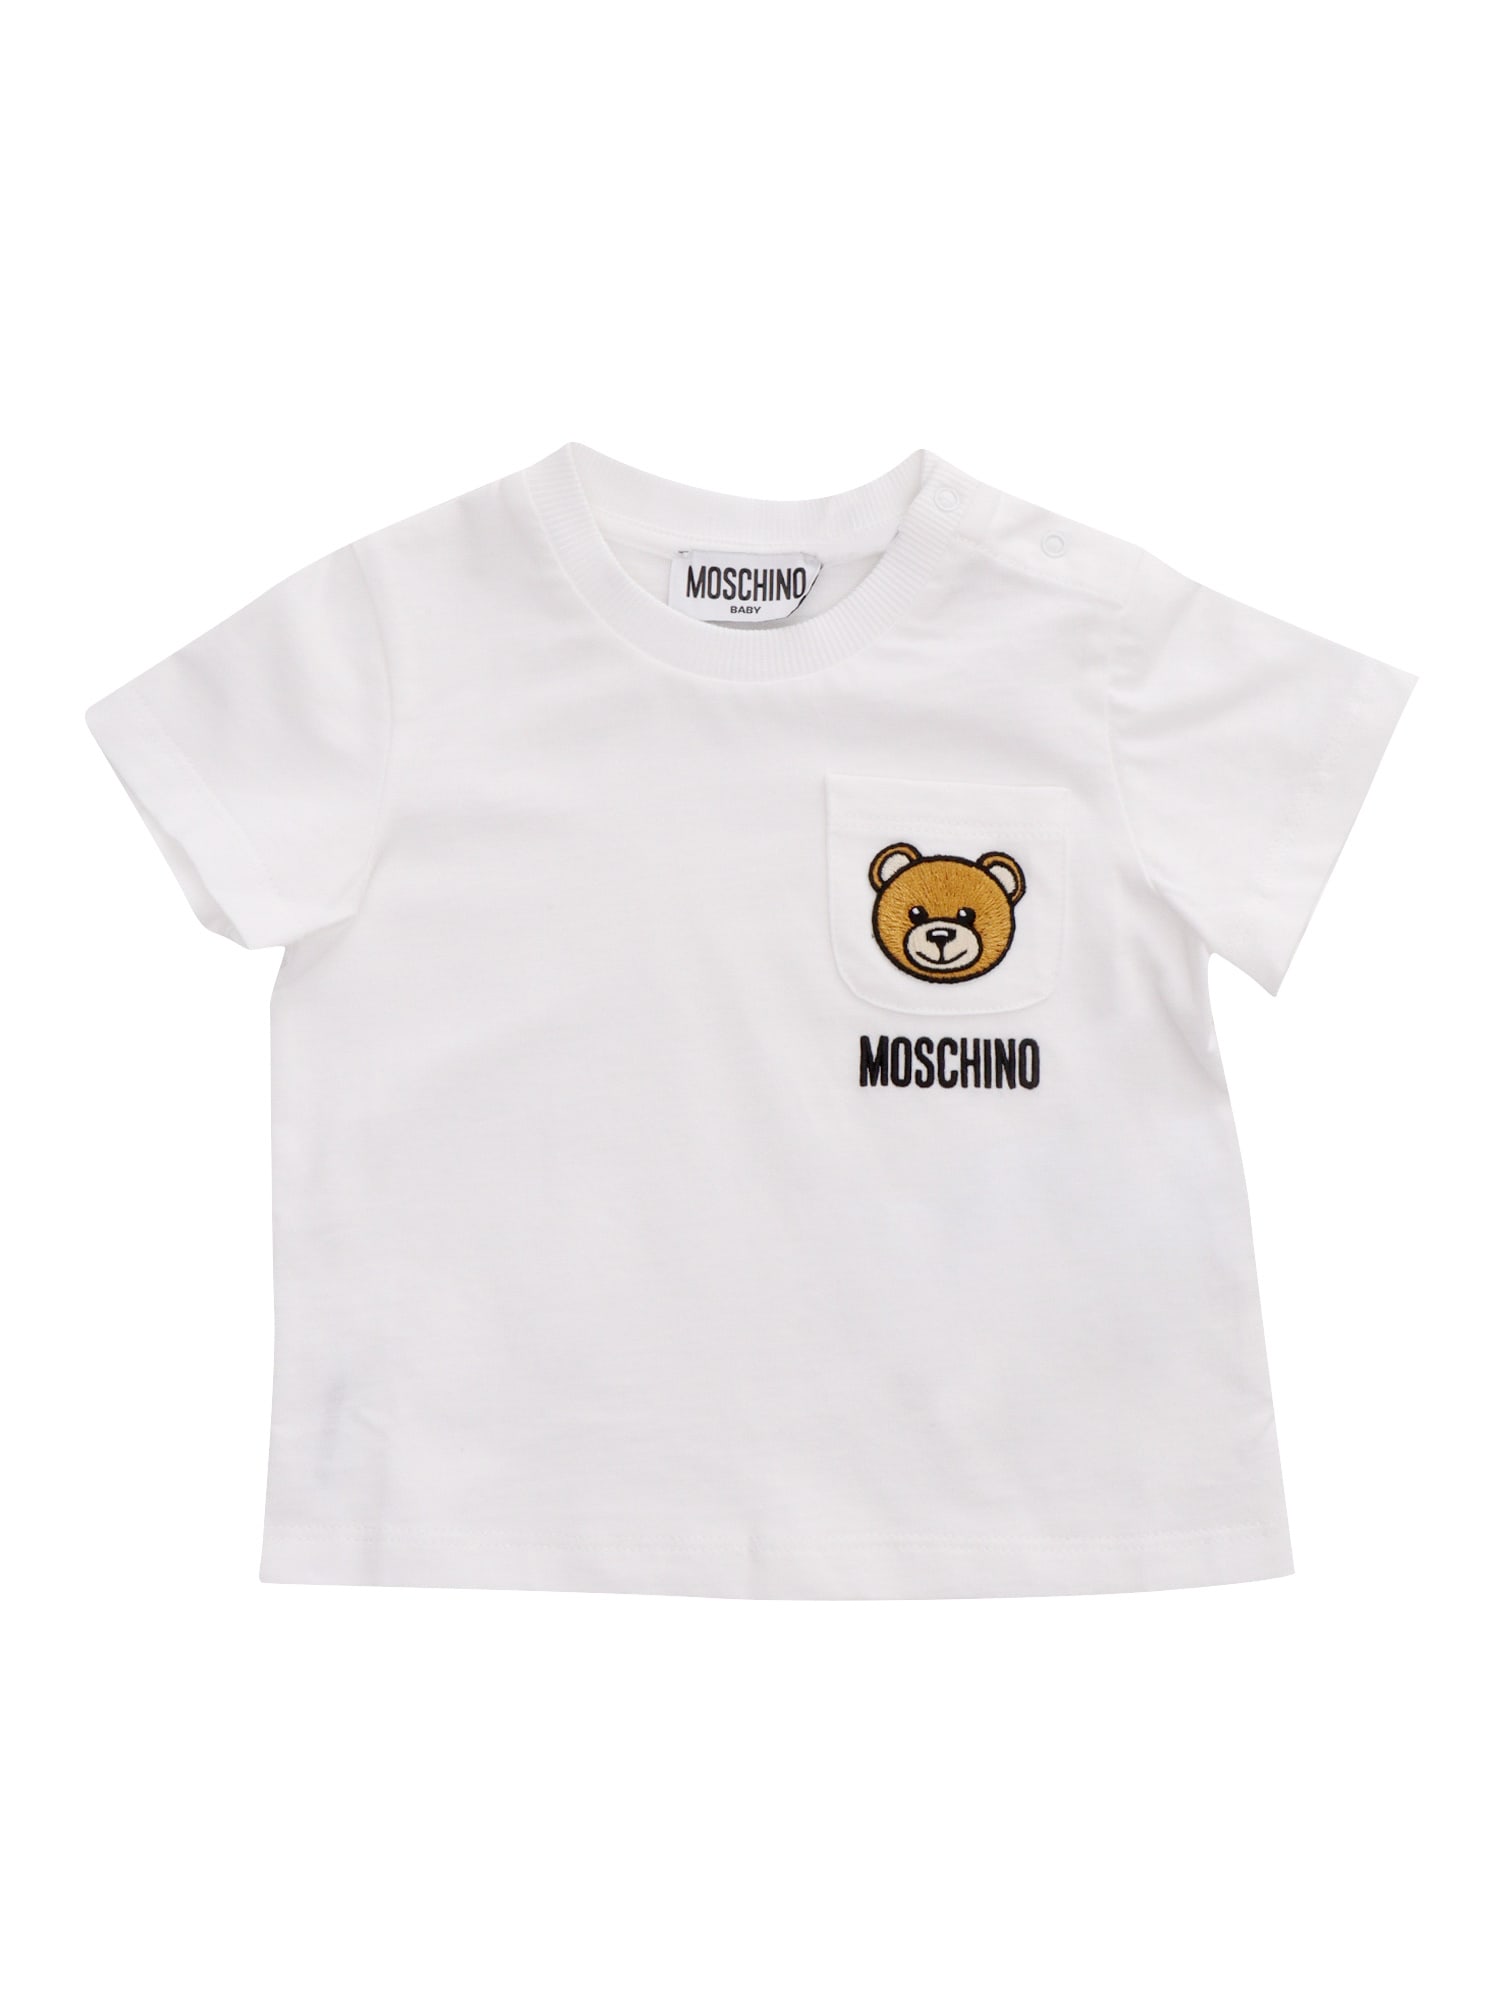 Moschino Babies' White T-shirt With Logo